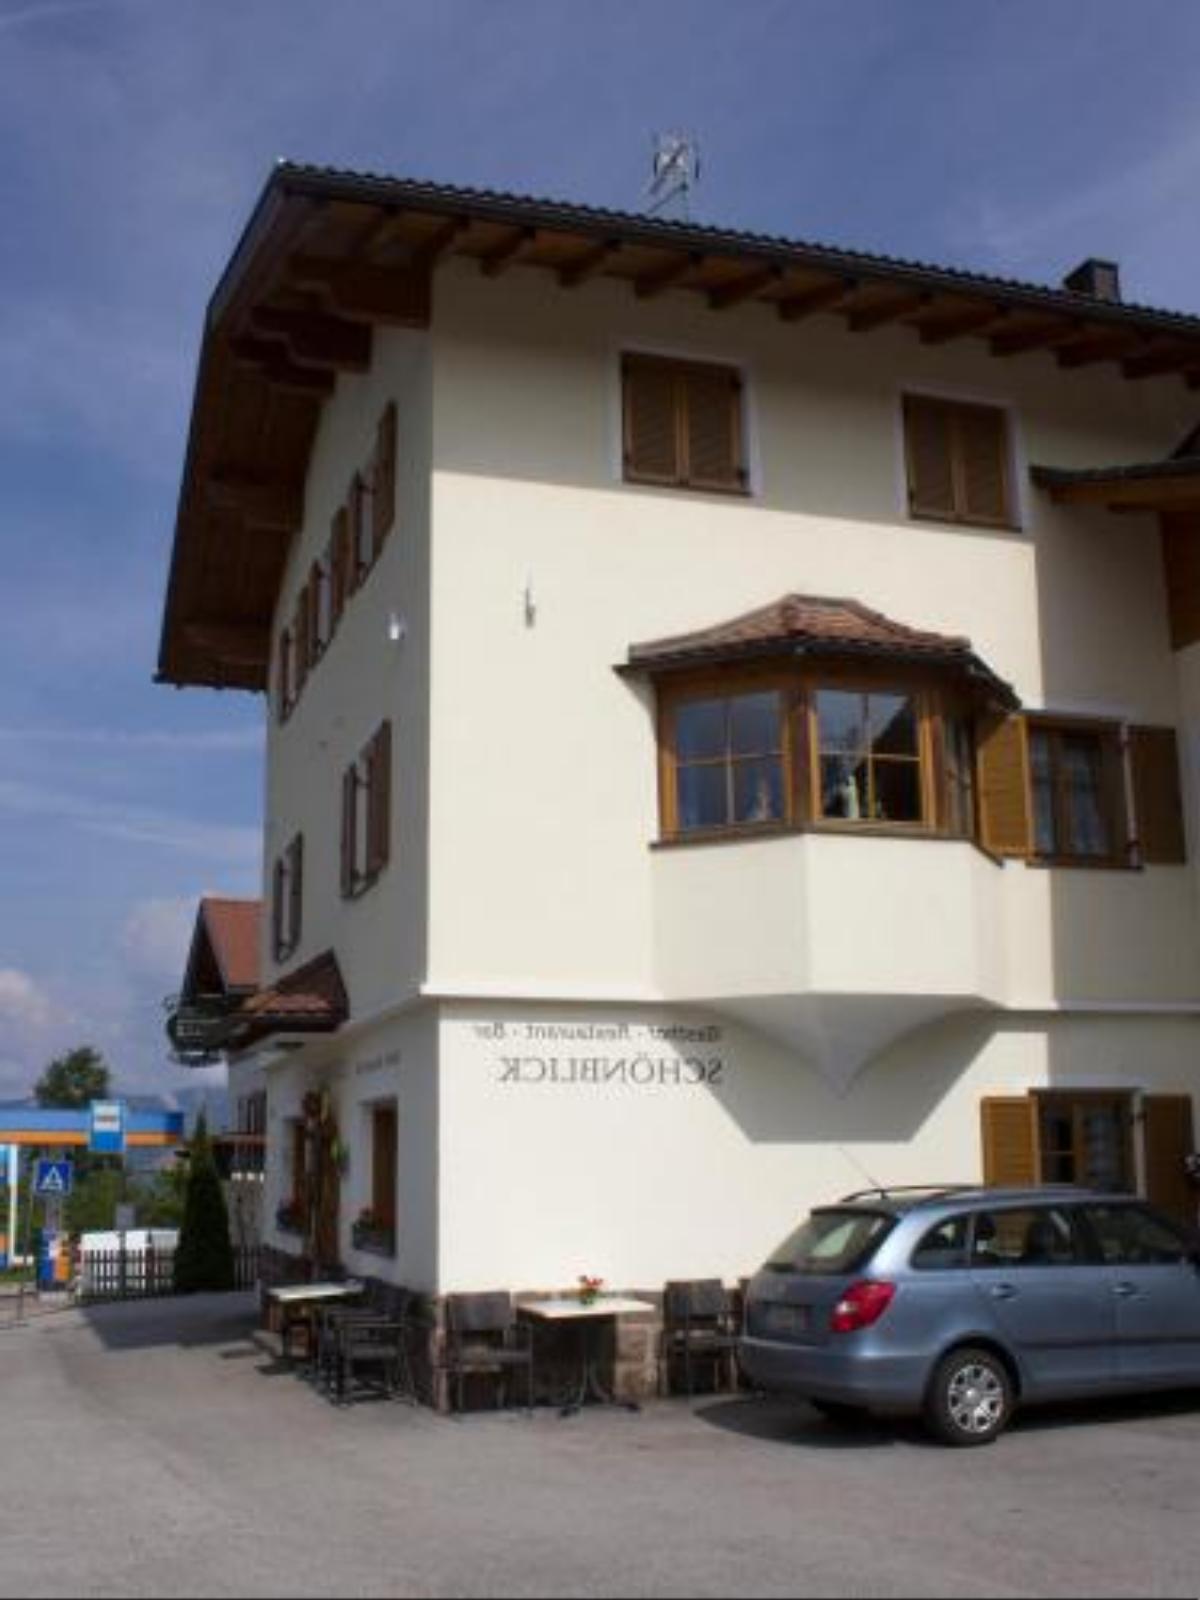 Gasthof Schönblick Hotel Aldino Italy